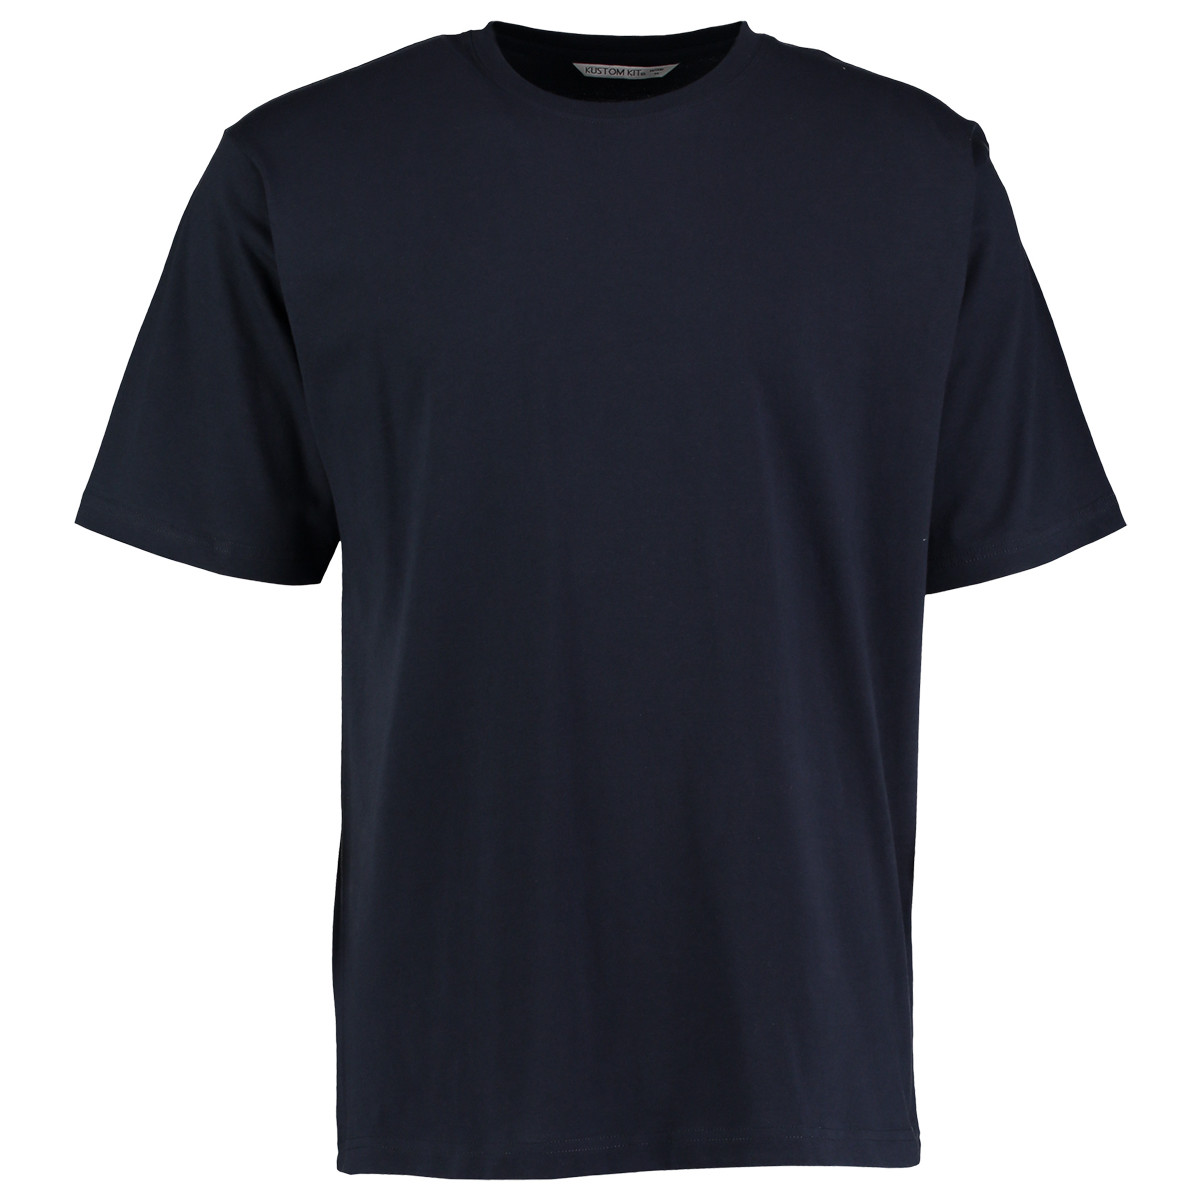 Vêtements Homme T-shirts manches courtes Kustom Kit Hunky Superior Bleu